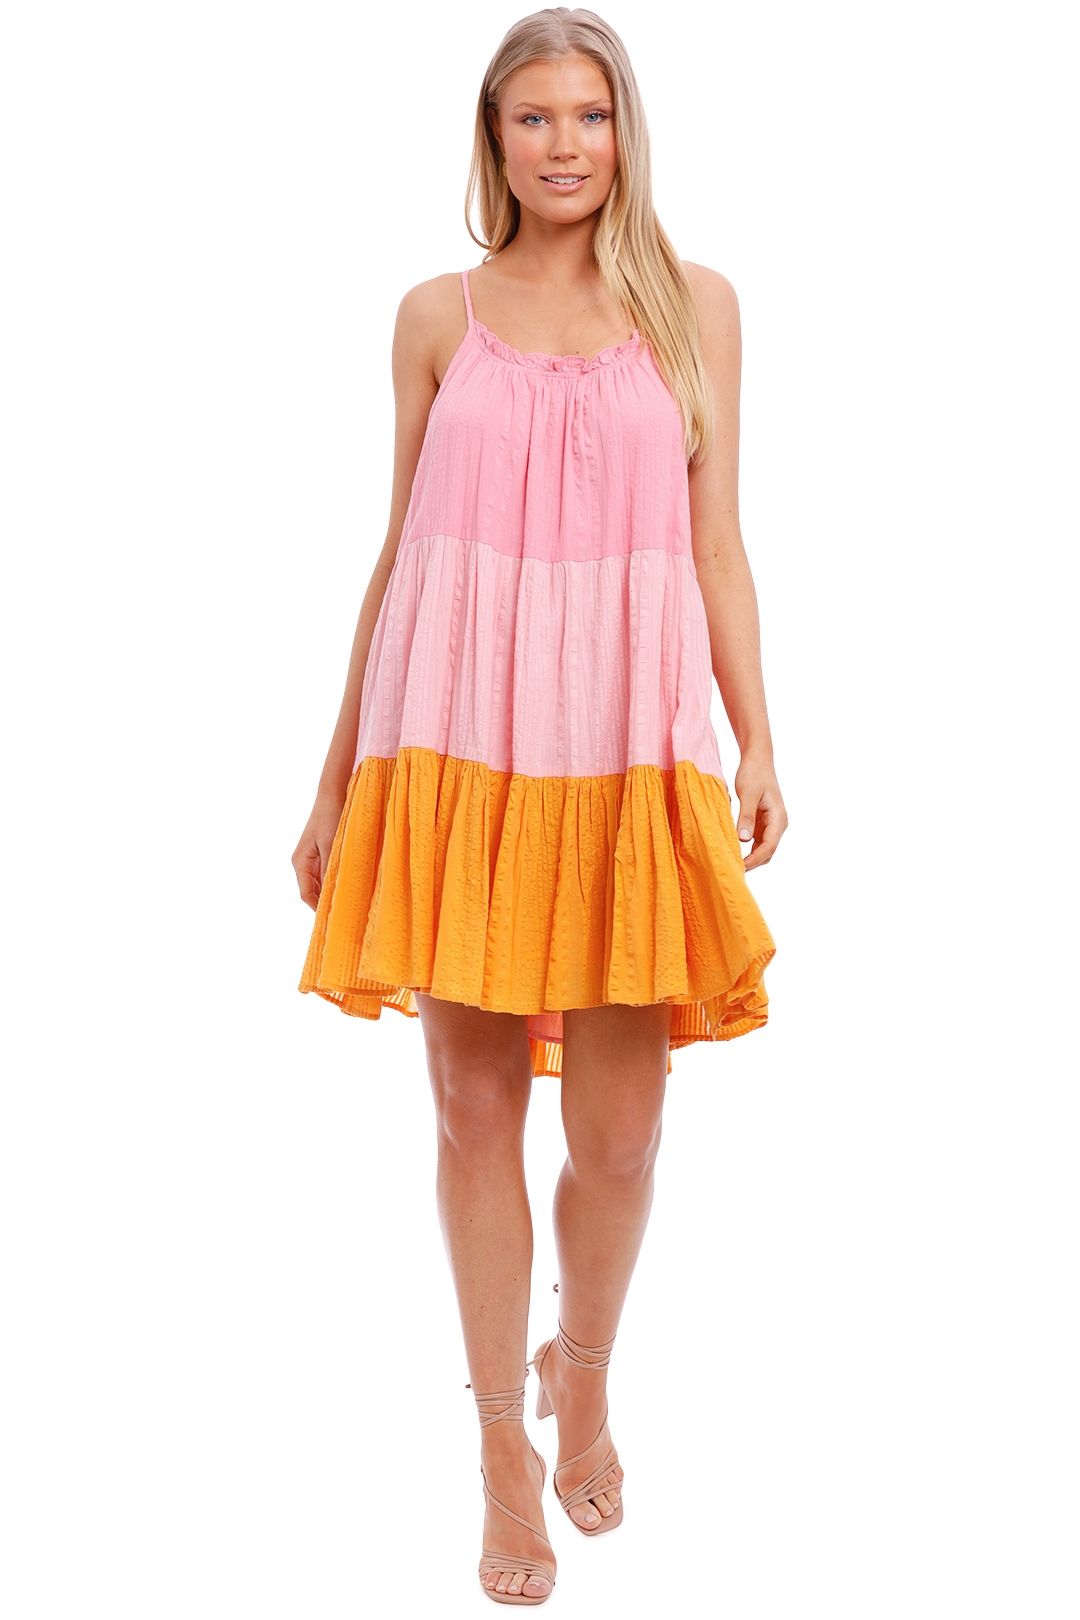 Steele Miami Dress mini